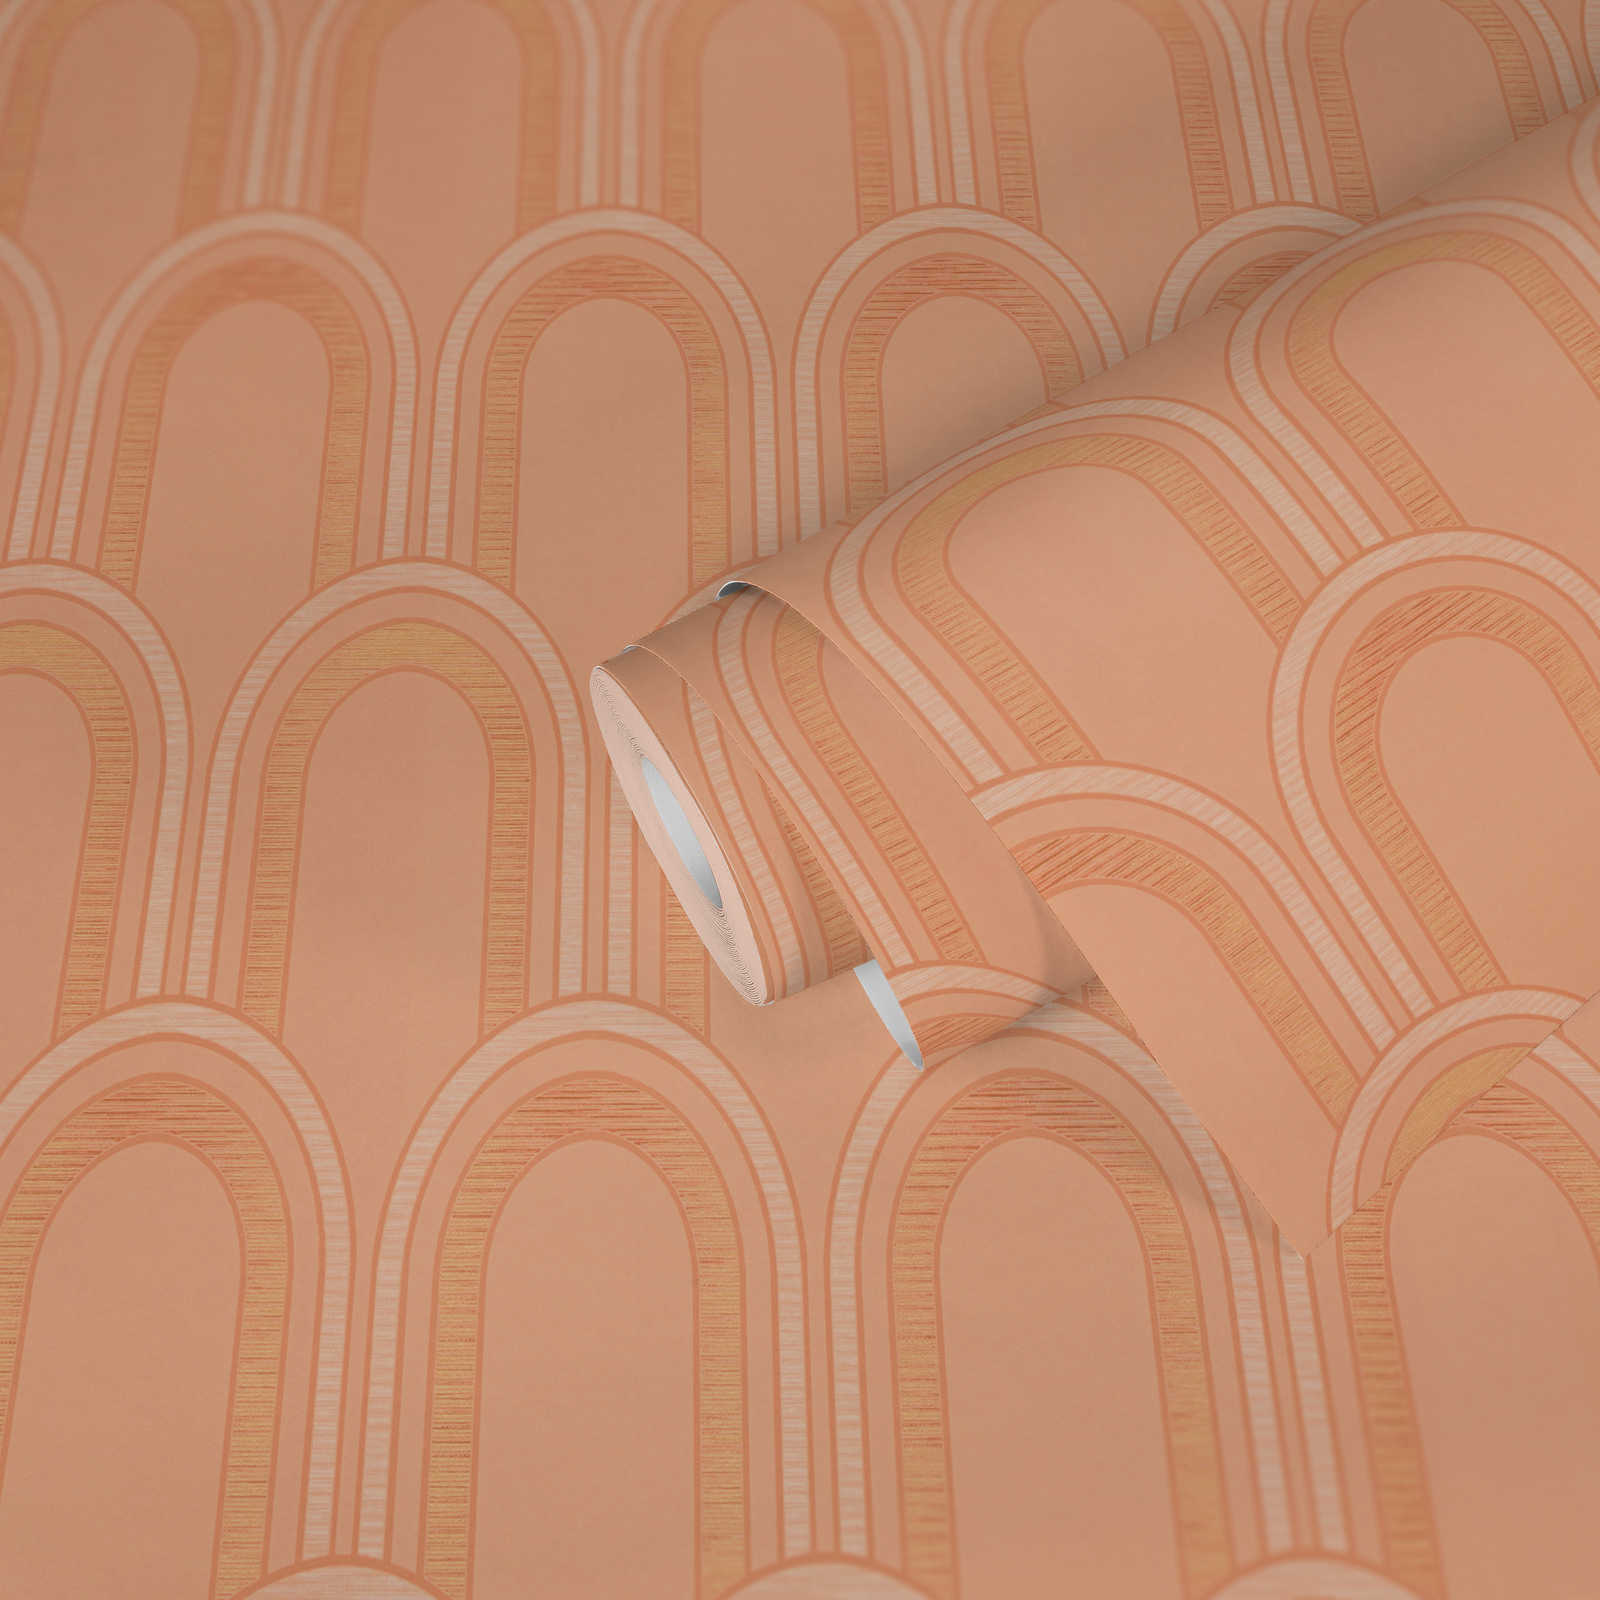             Papel pintado no tejido con motivos de lazos - naranja, blanco, dorado
        